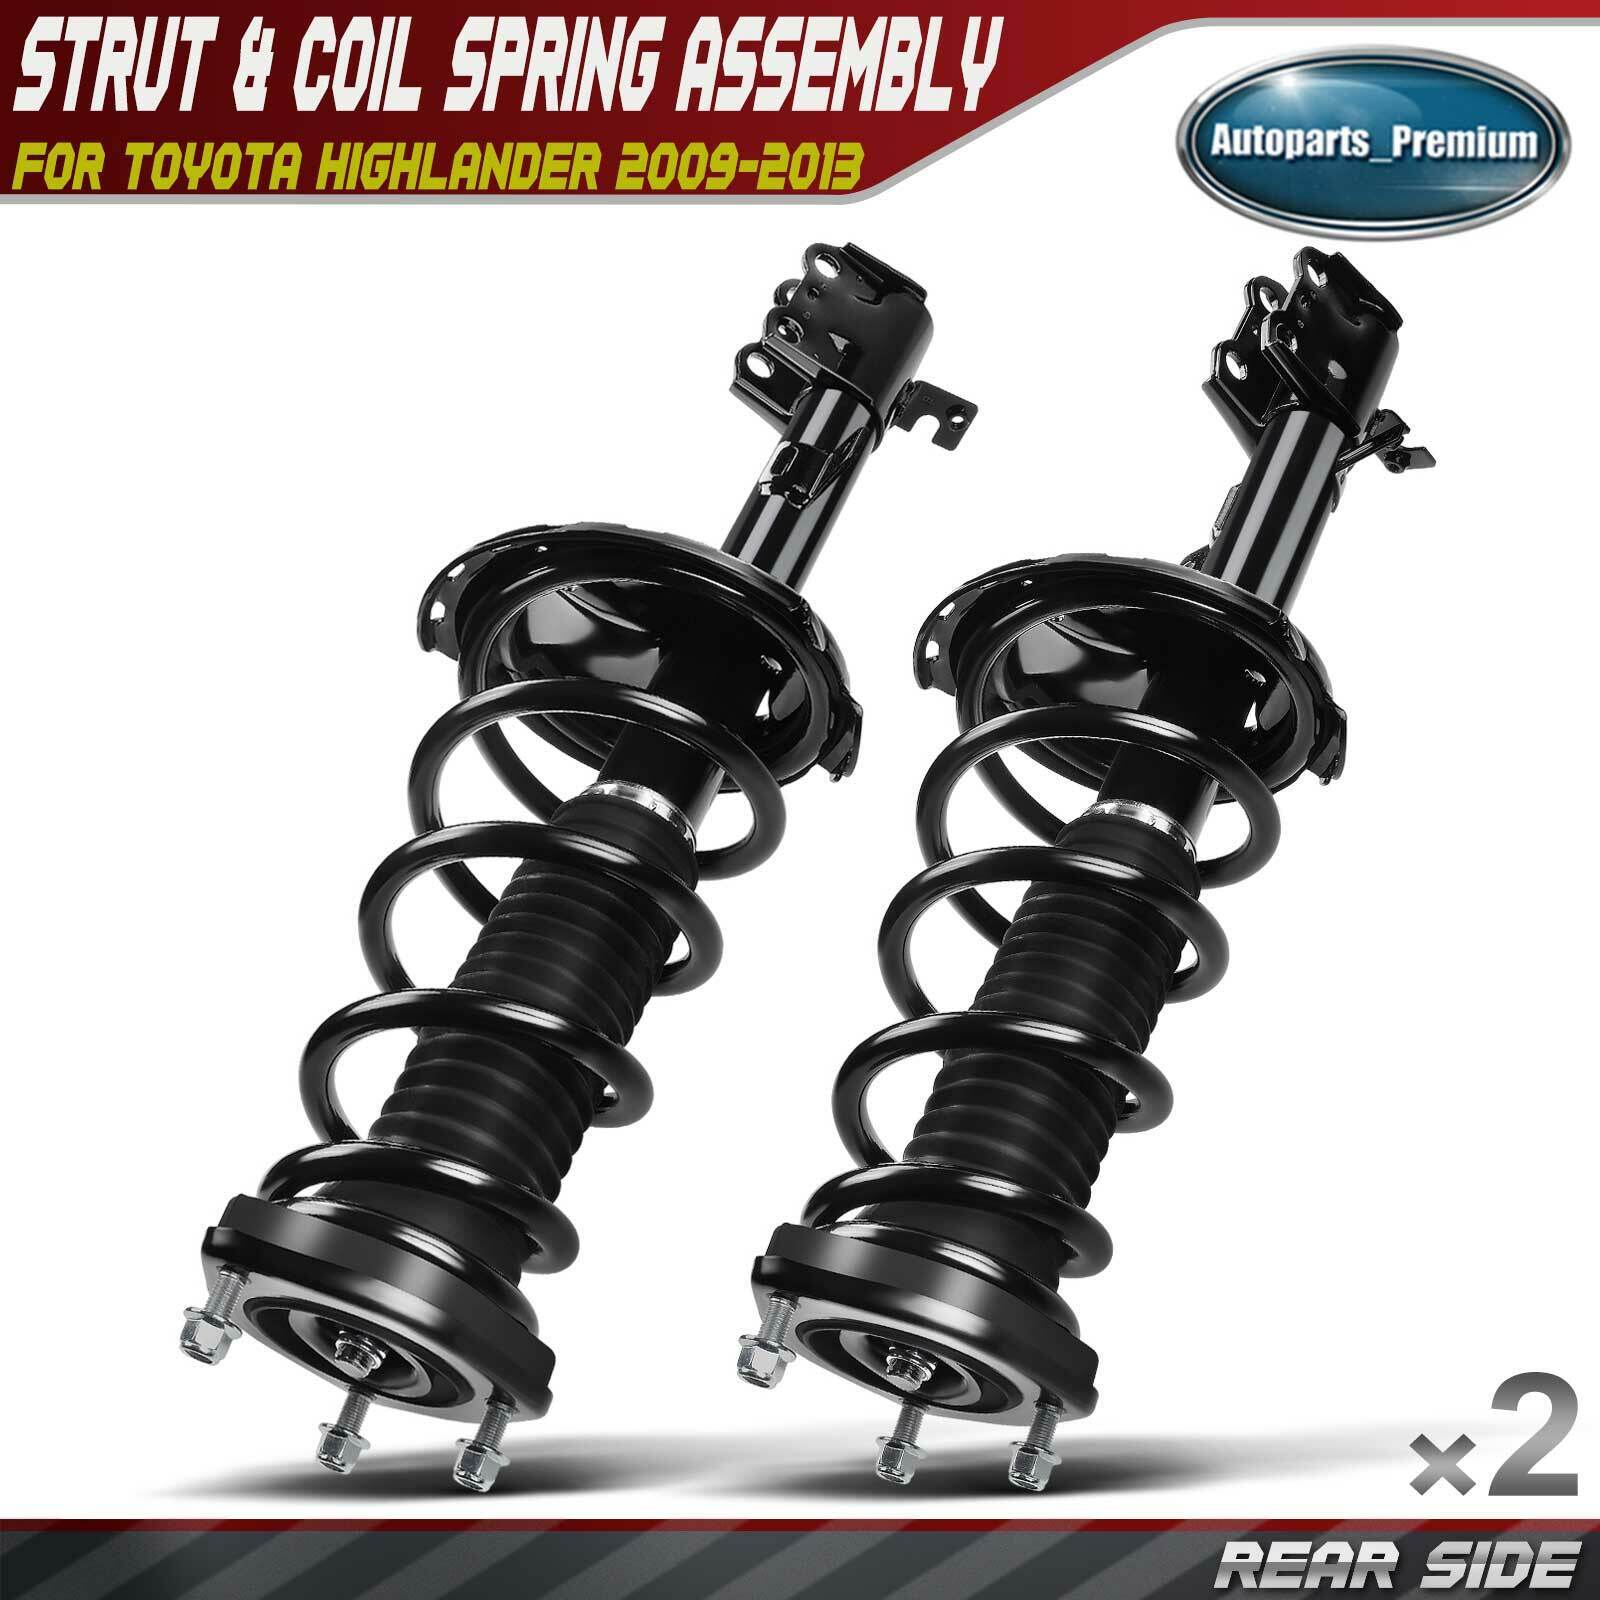 2x Rear Complete Strut & Coil Spring Assembly for Toyota Highlander 2009-2013